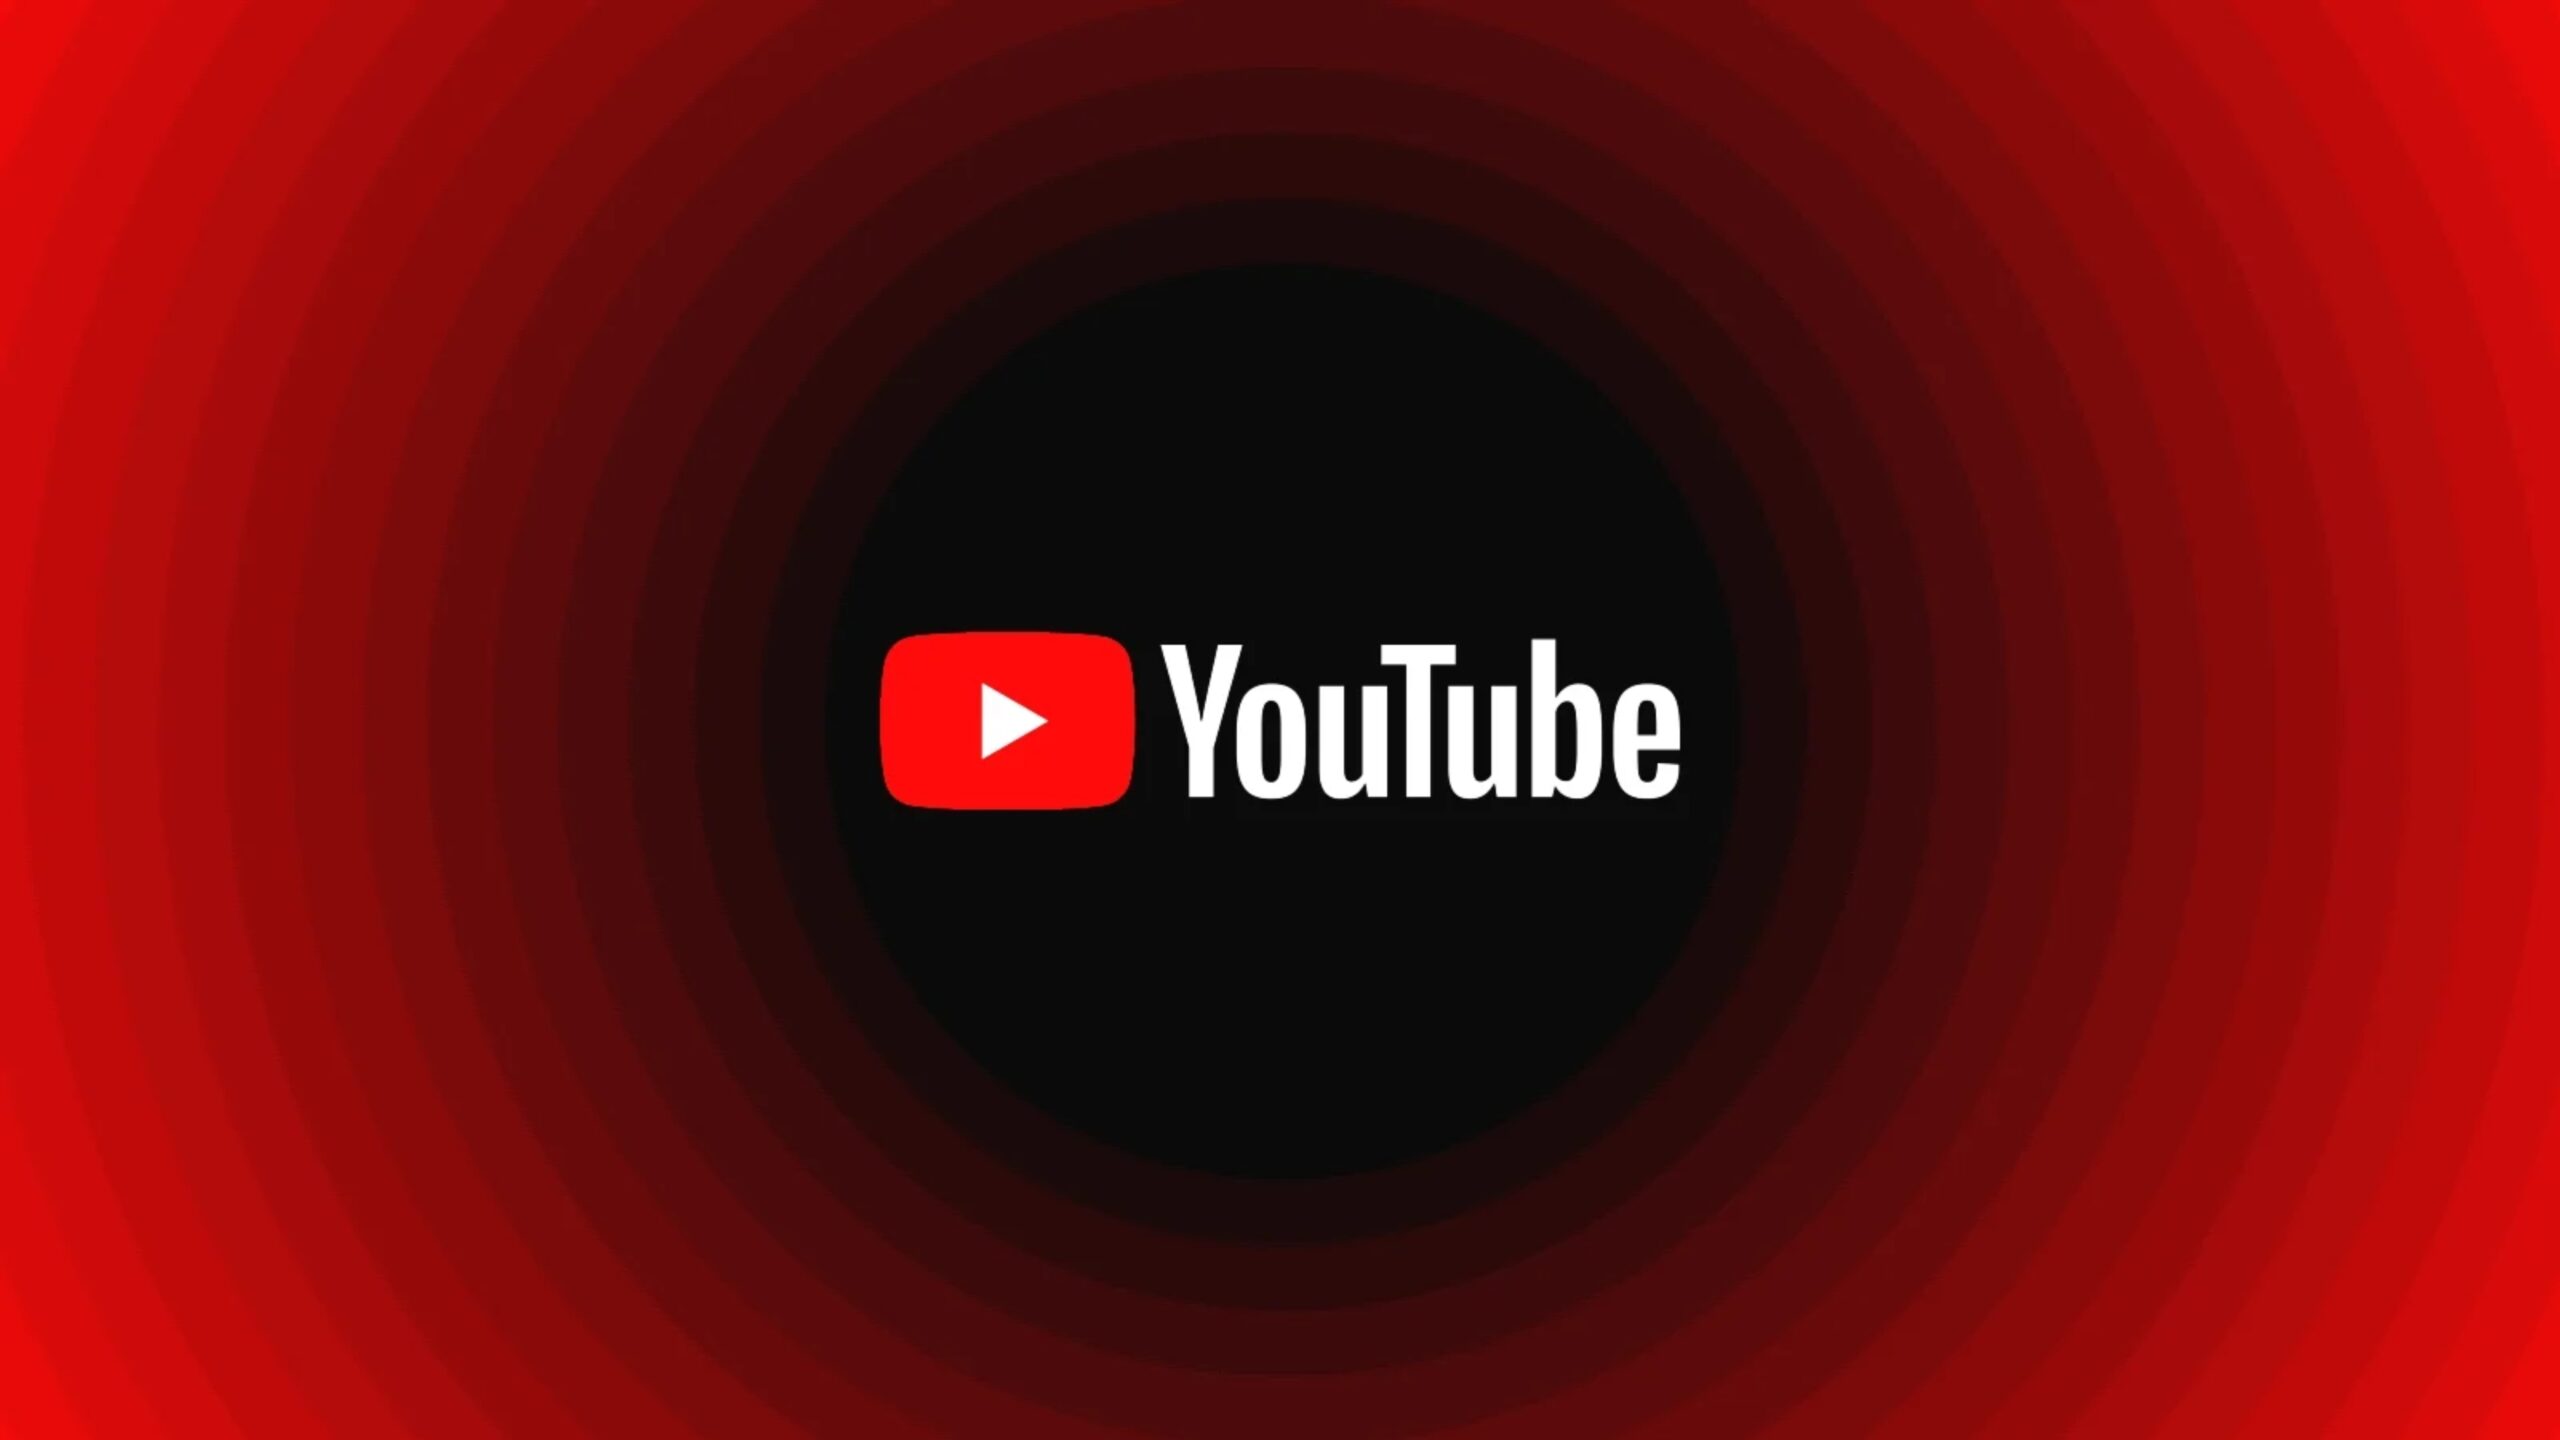 youtube-intensifica-lentidao-para-usuarios-com-bloqueadores-de-anuncios